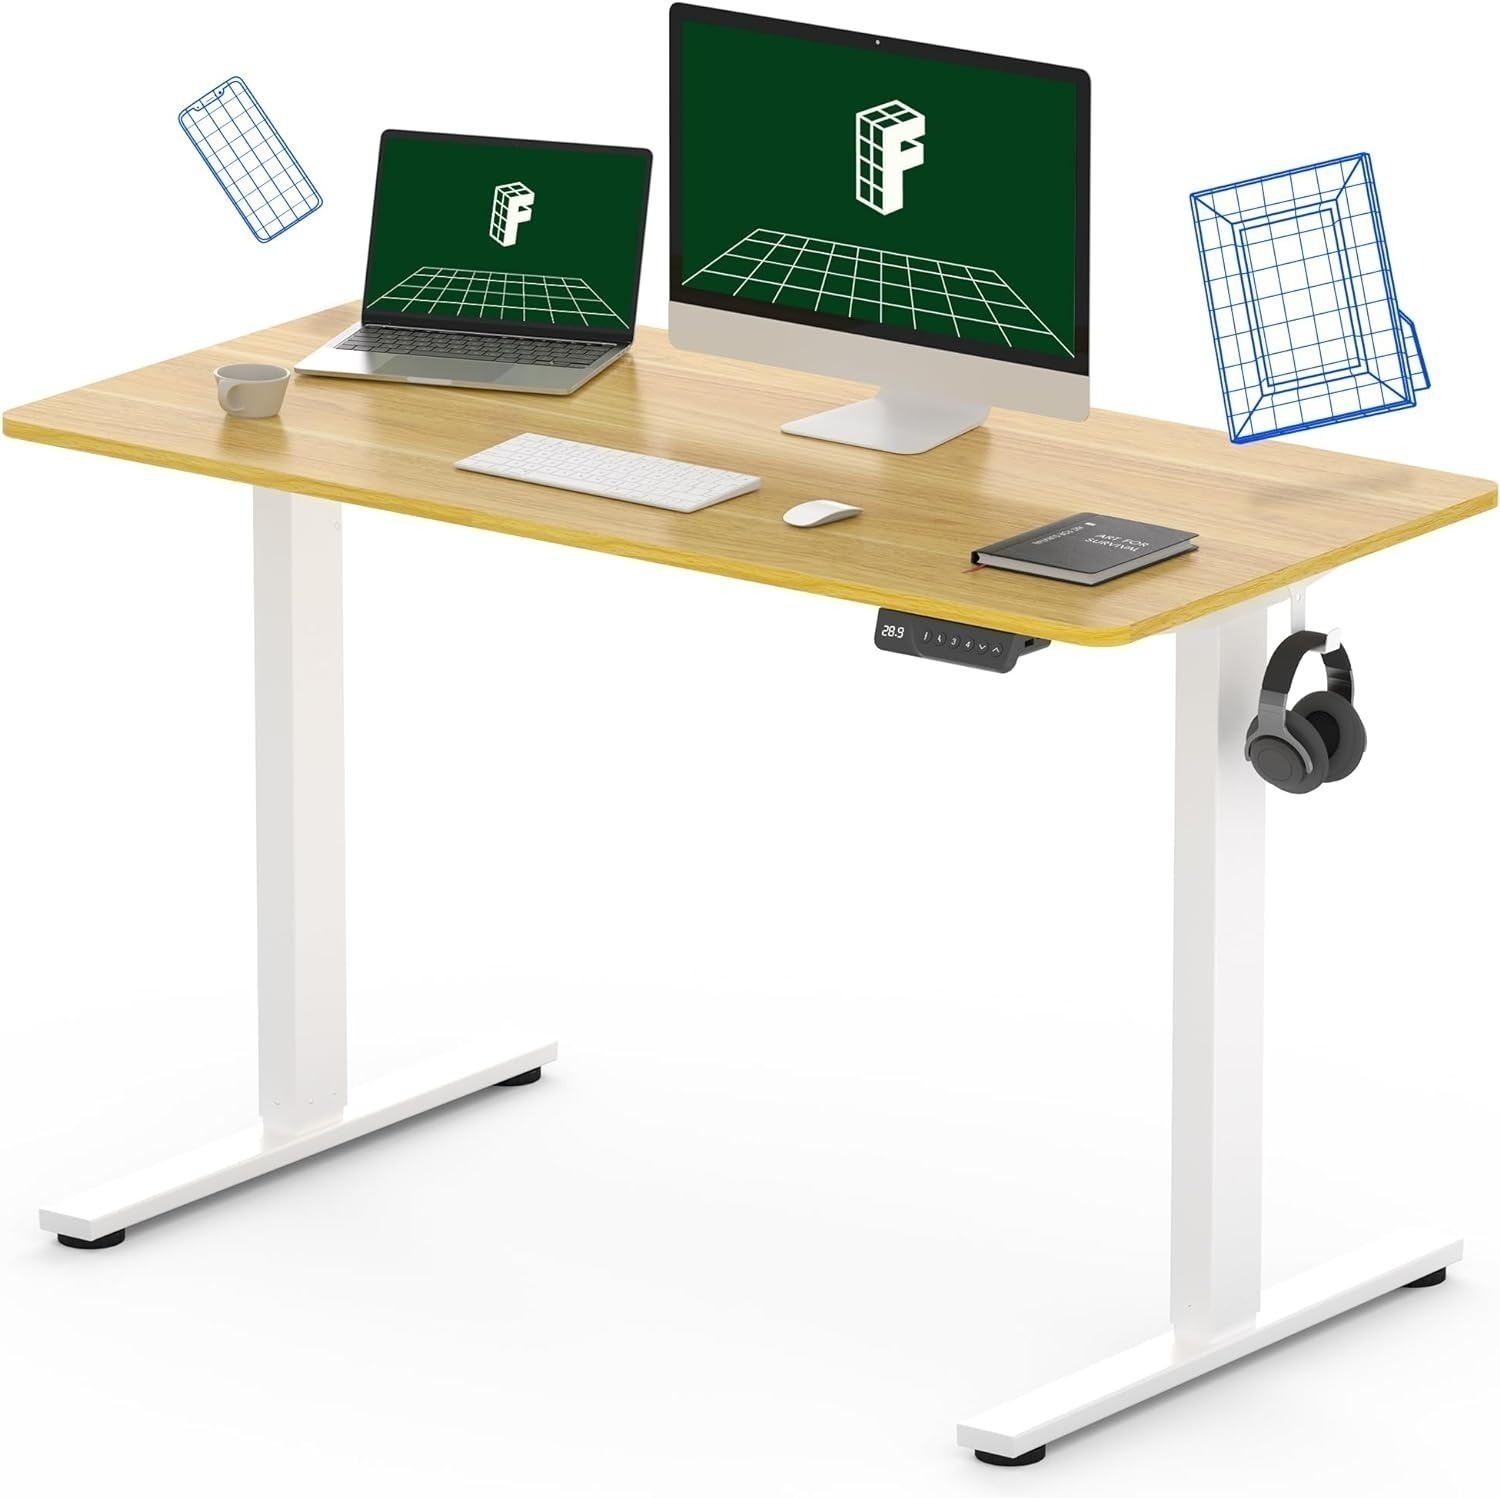 48"x24" FLEXISPOT EN1 Electric Standing Desk w/ Whole-Piece Desktop: White Frame + Maple Top $145, White Frame + White Top $149.40 + Free Shipping